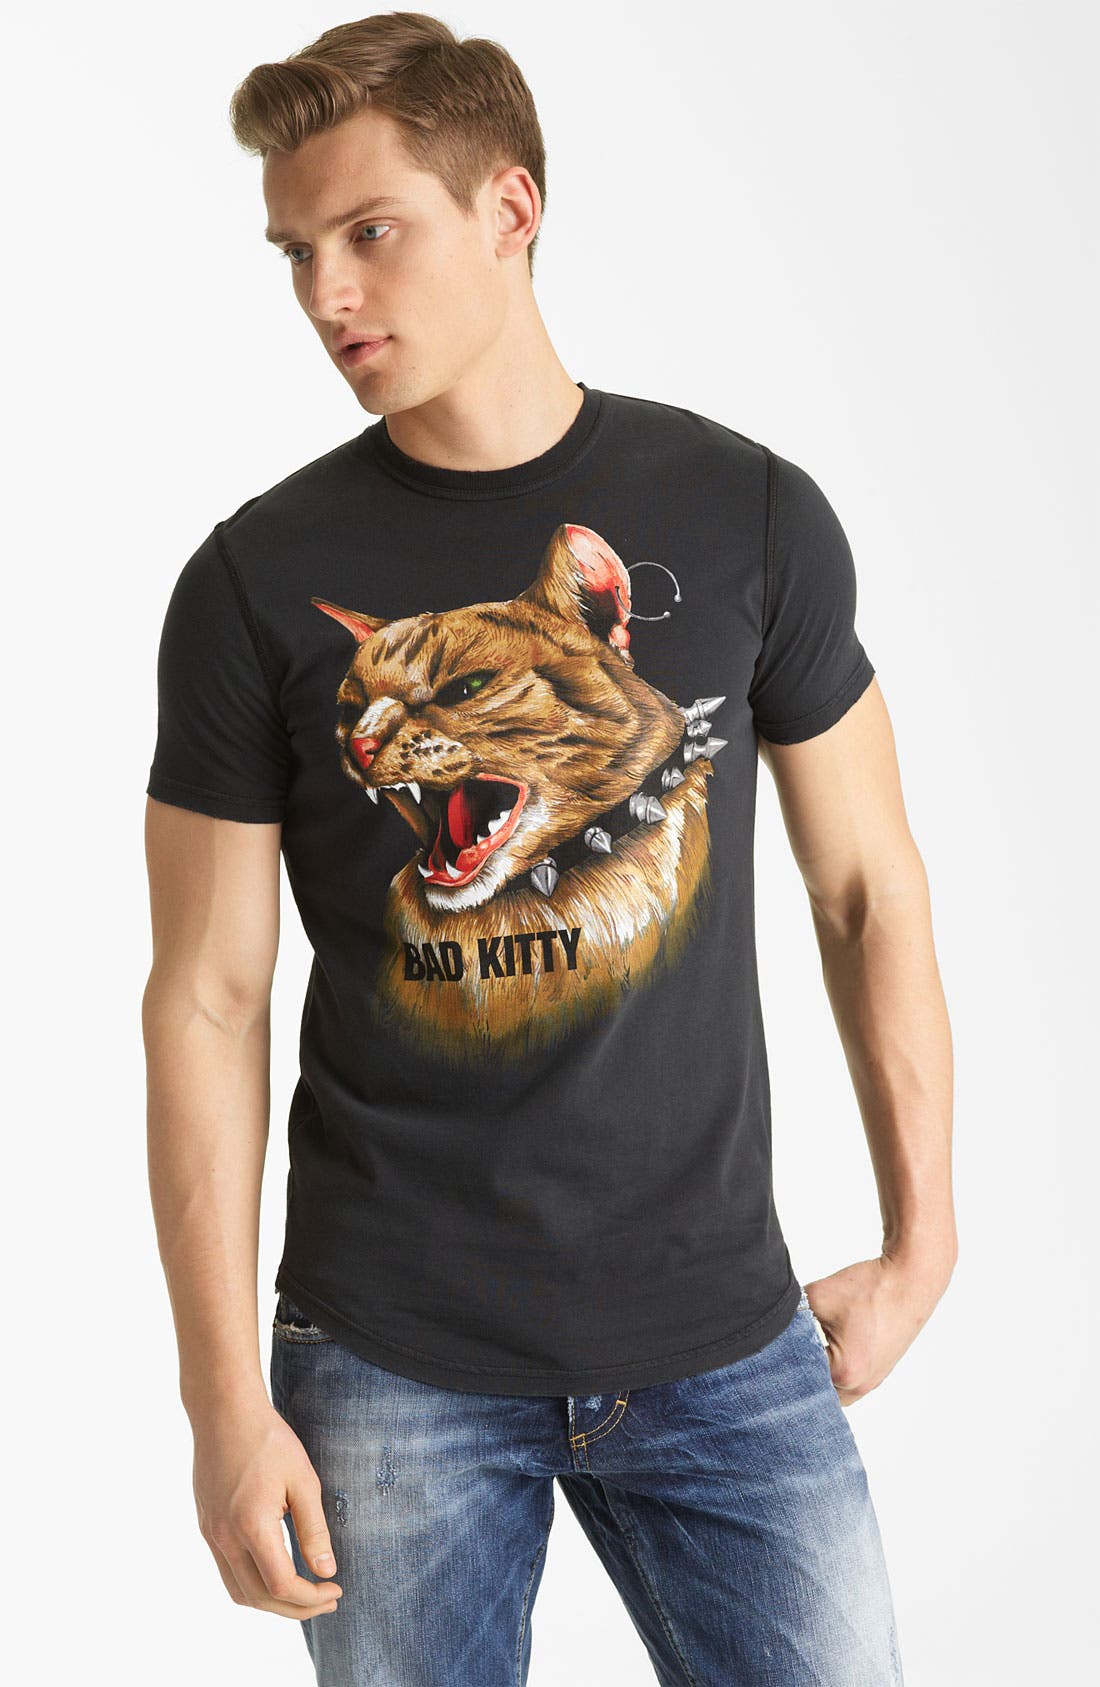 bad kitty shirt